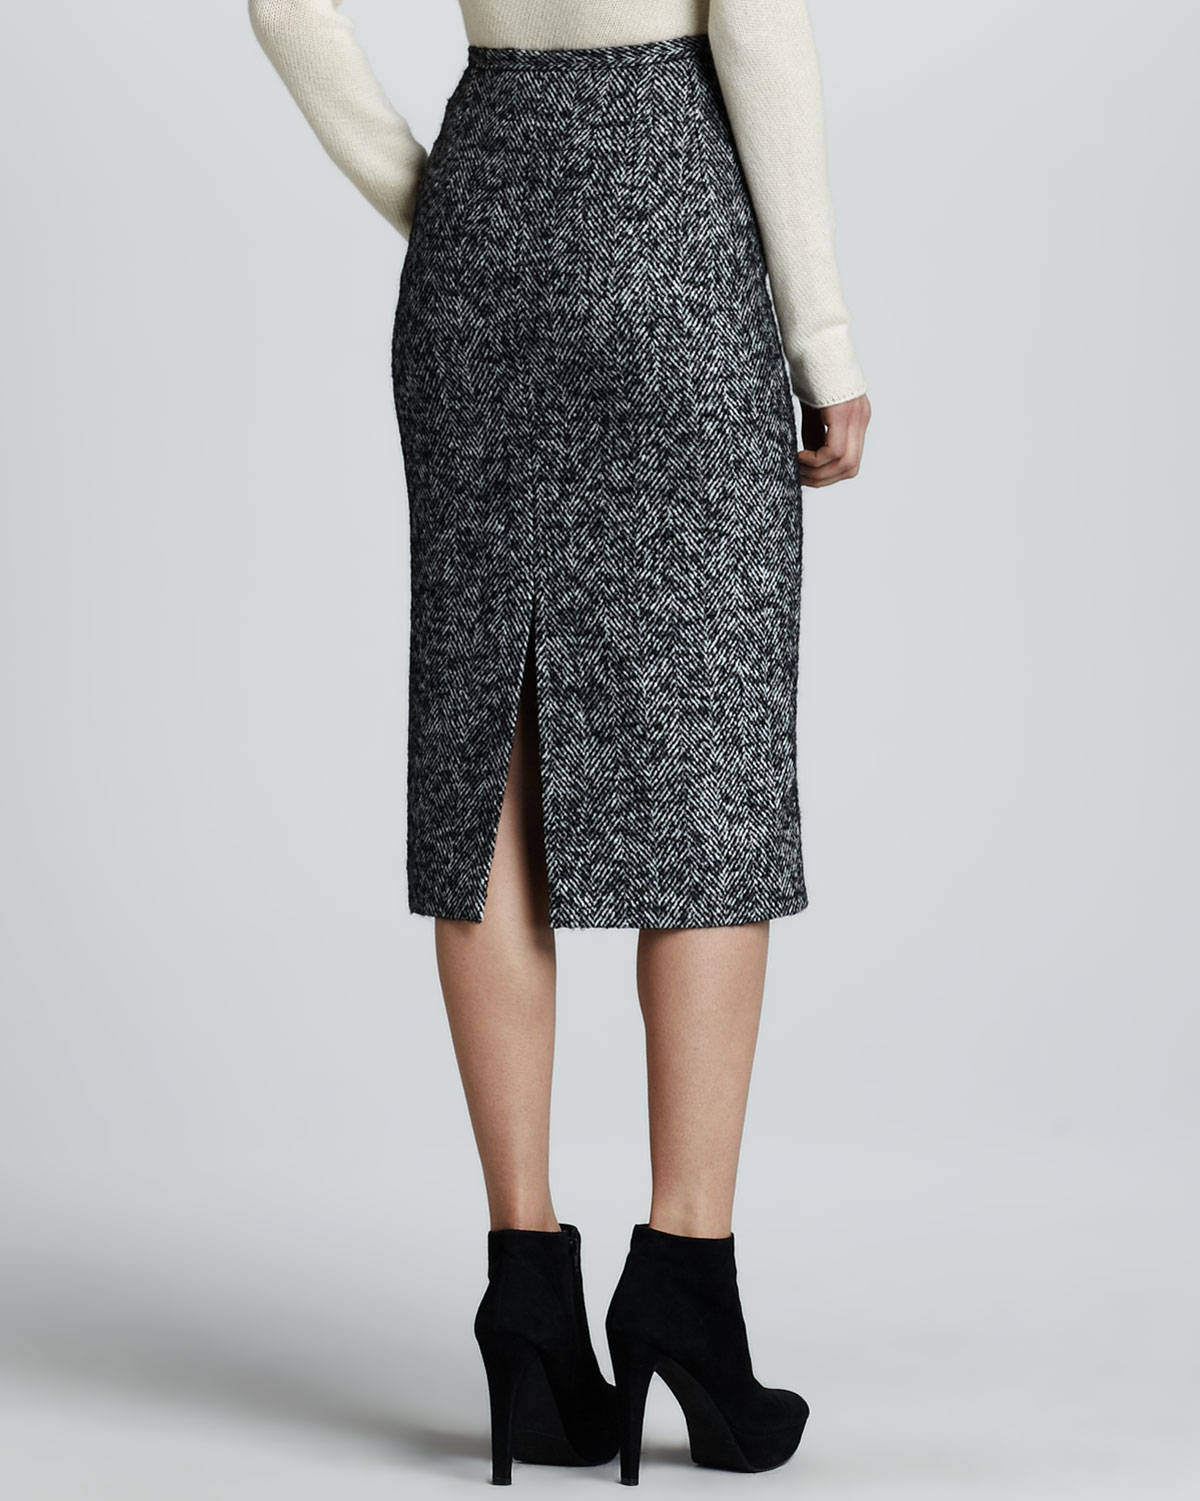 Lyst - Michael Kors Herringbone Pencil Skirt in Gray